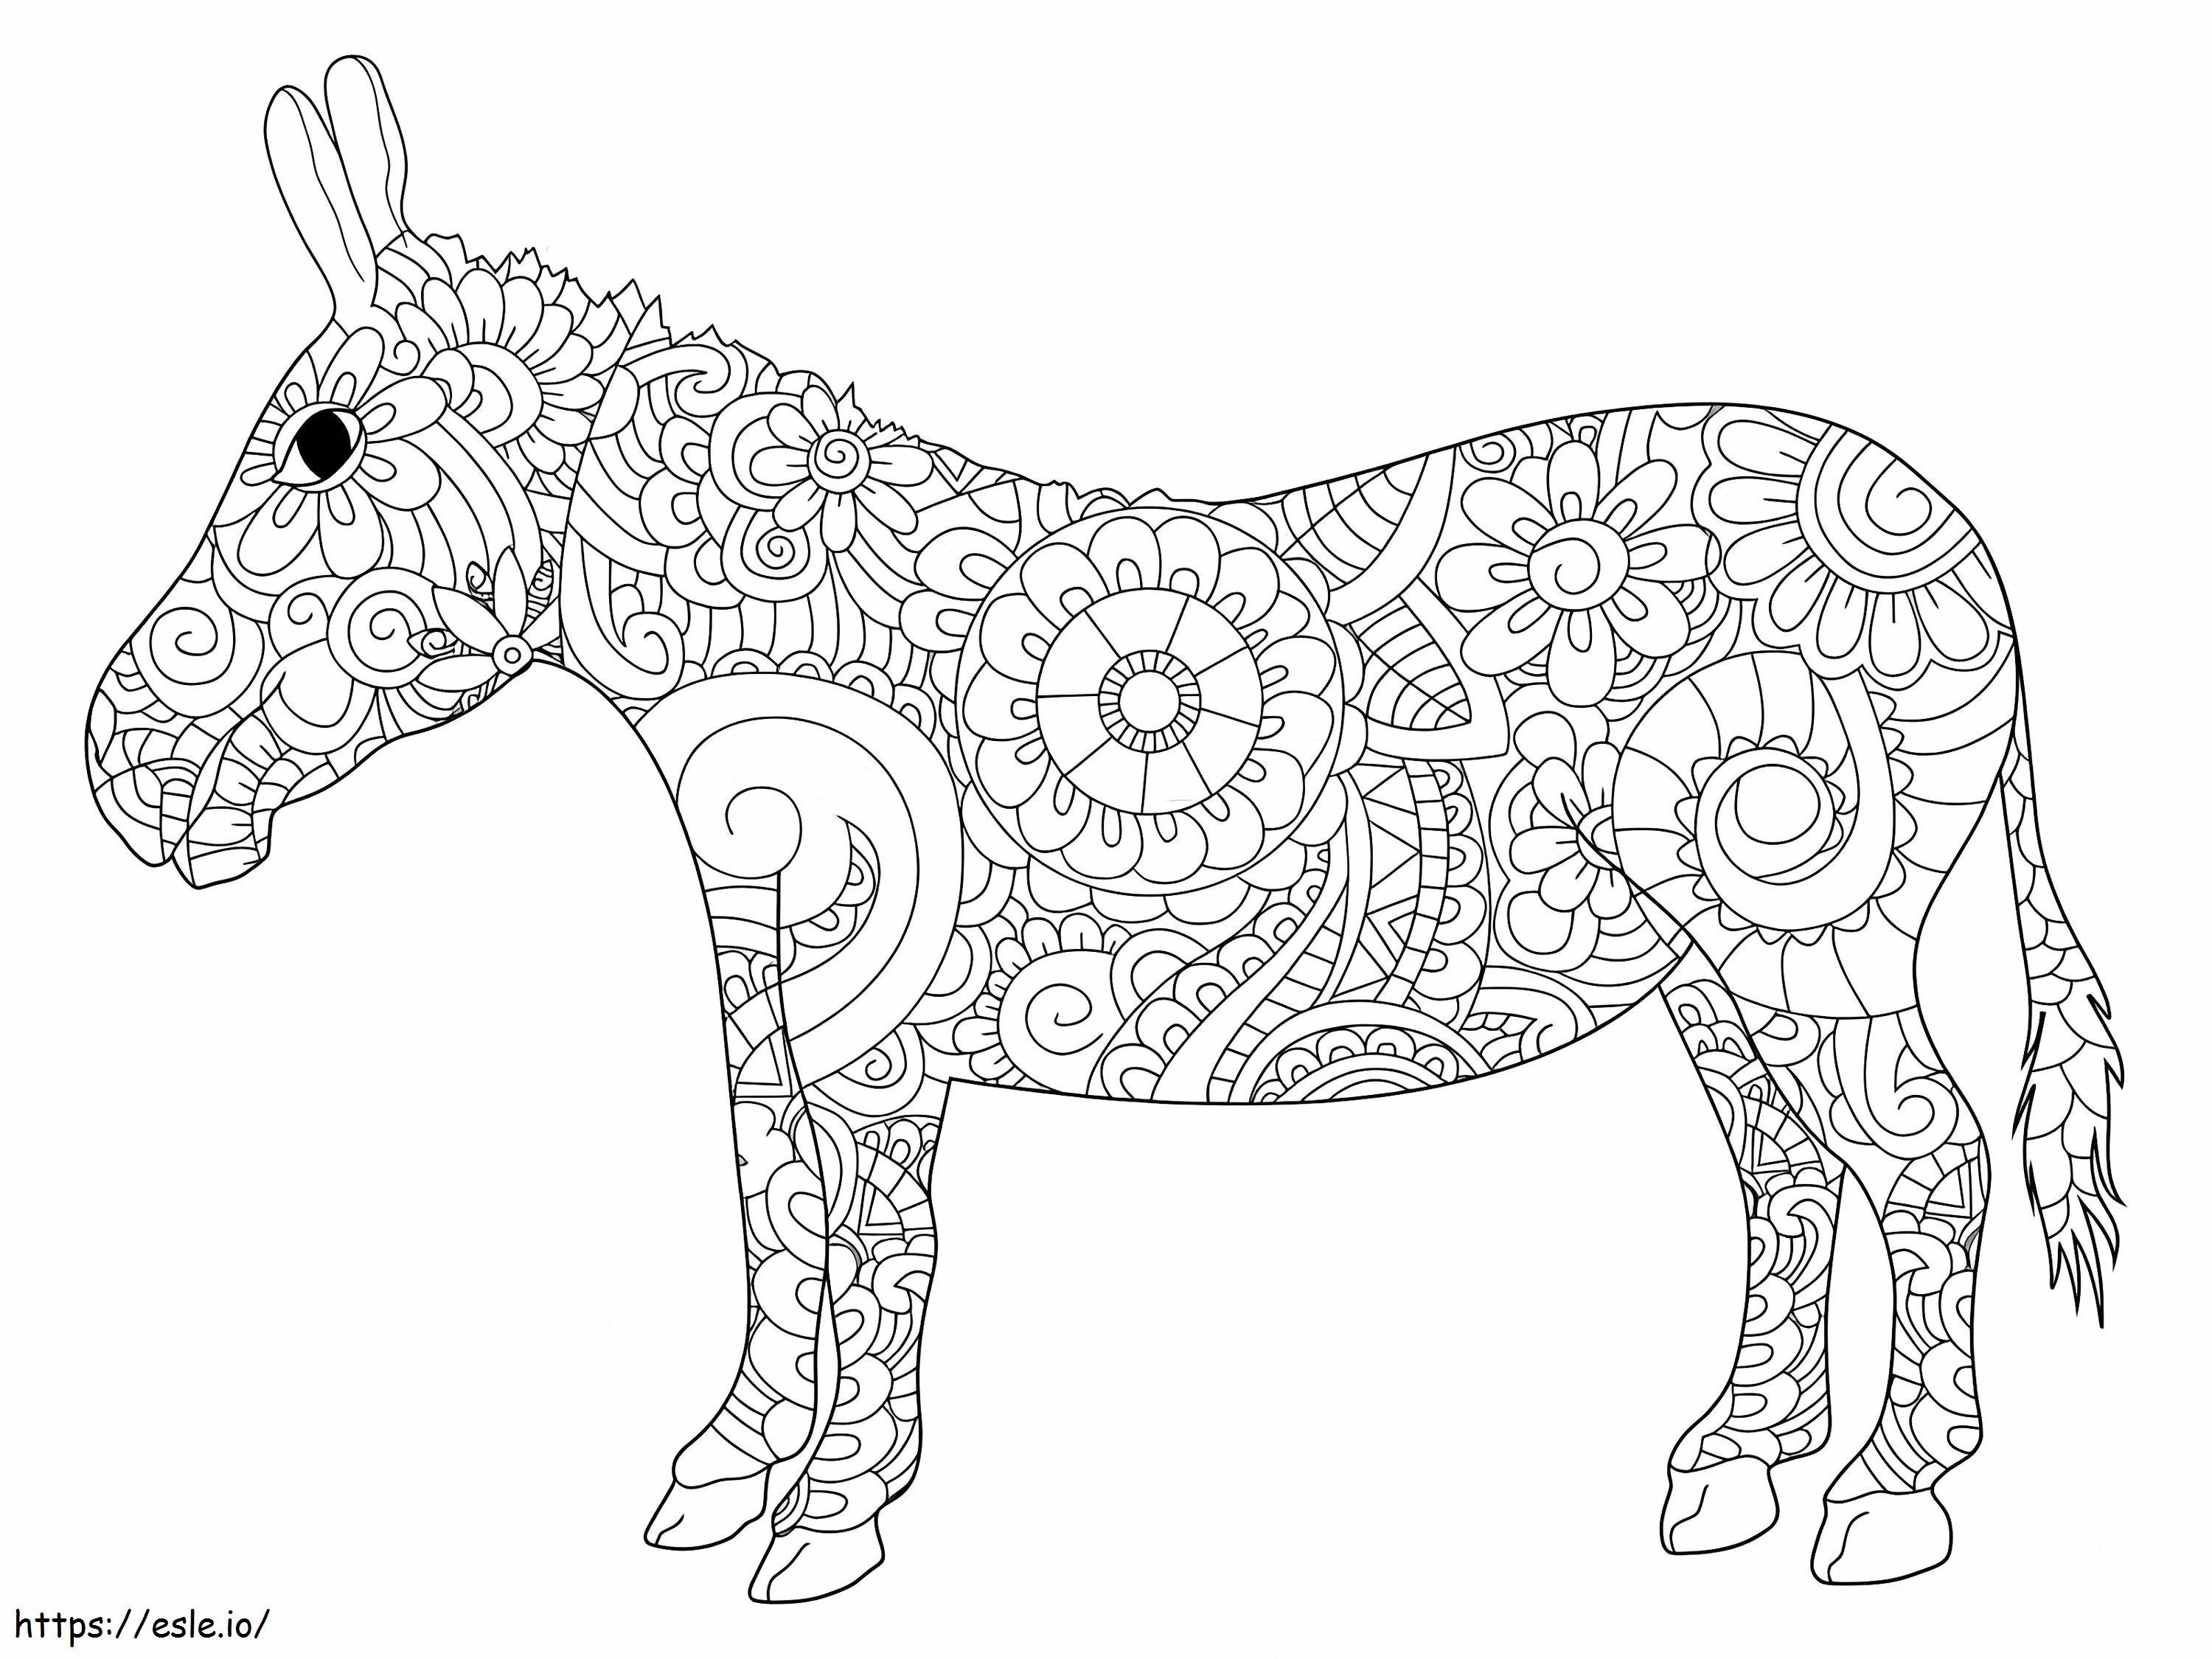 Esel-Mandala ausmalbilder